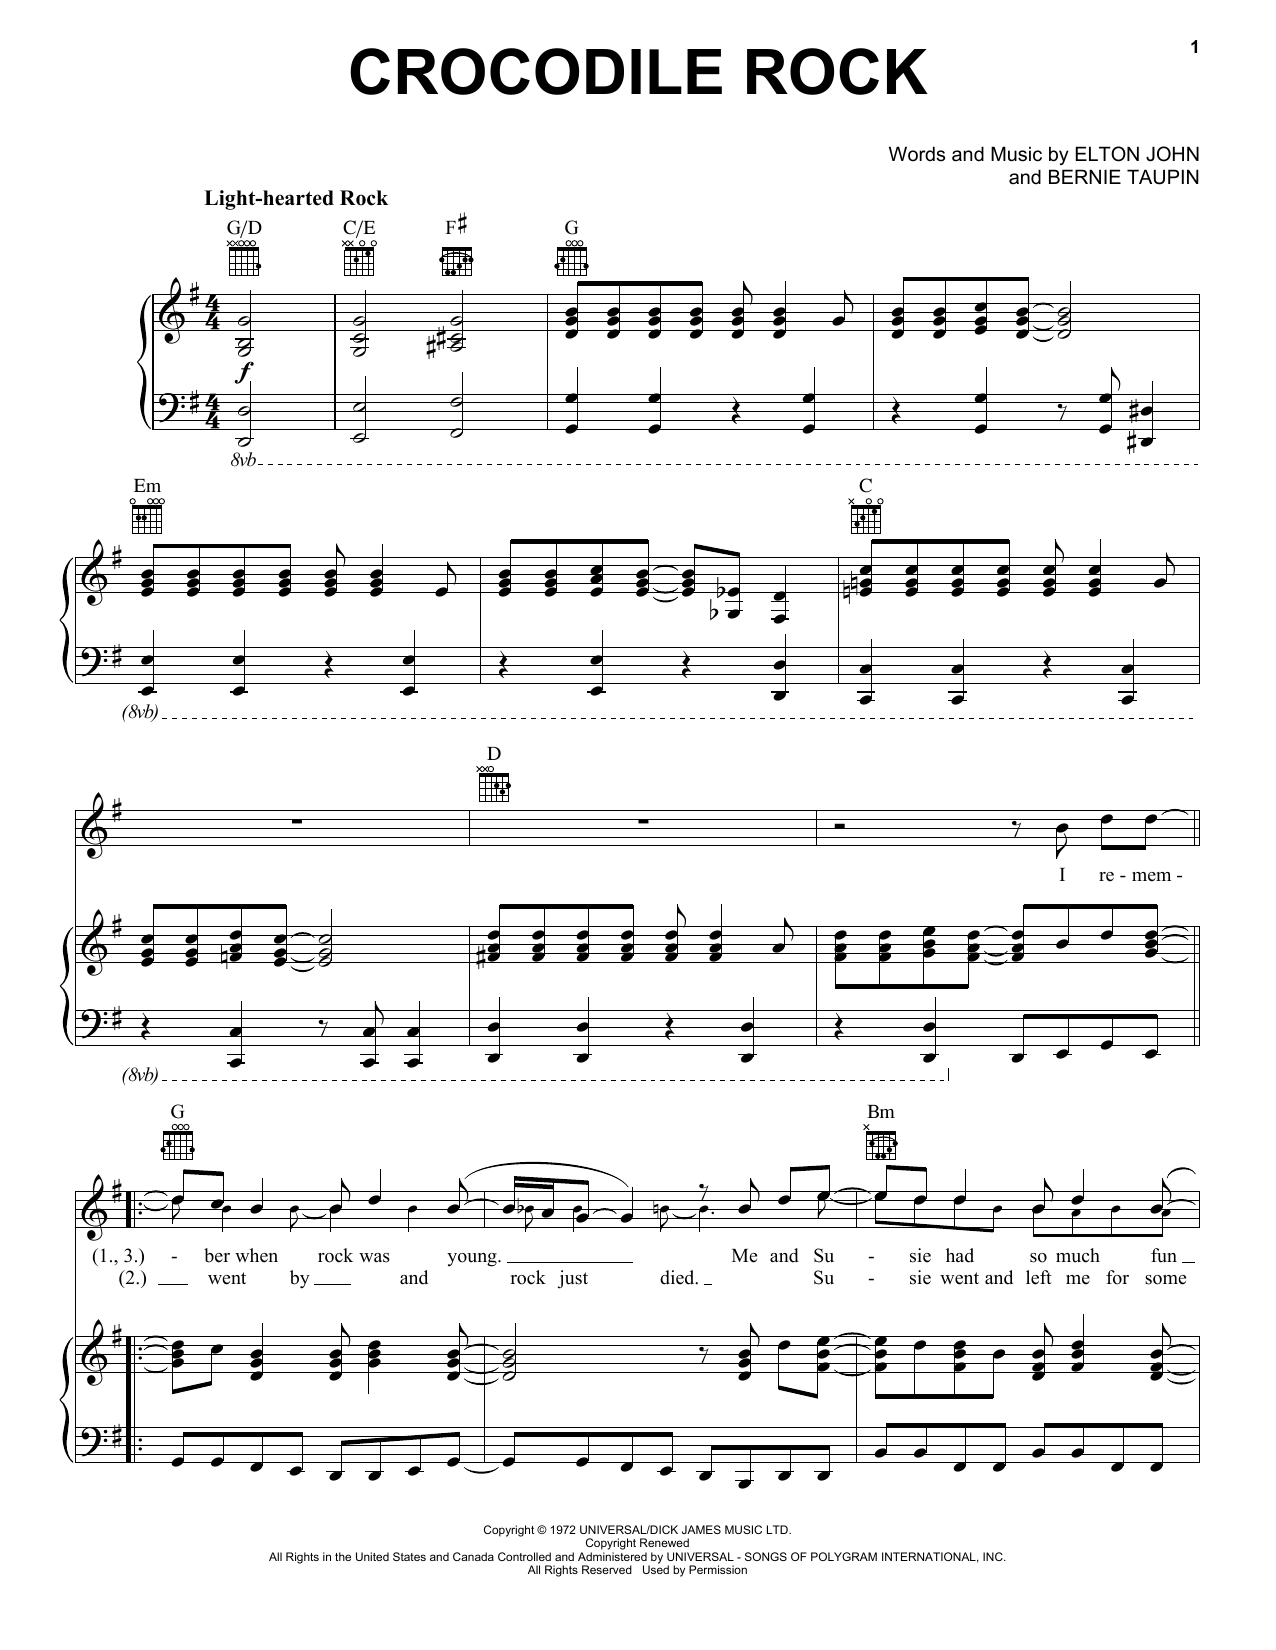 Download Elton John Crocodile Rock Sheet Music and learn how to play Keyboard Transcription PDF digital score in minutes